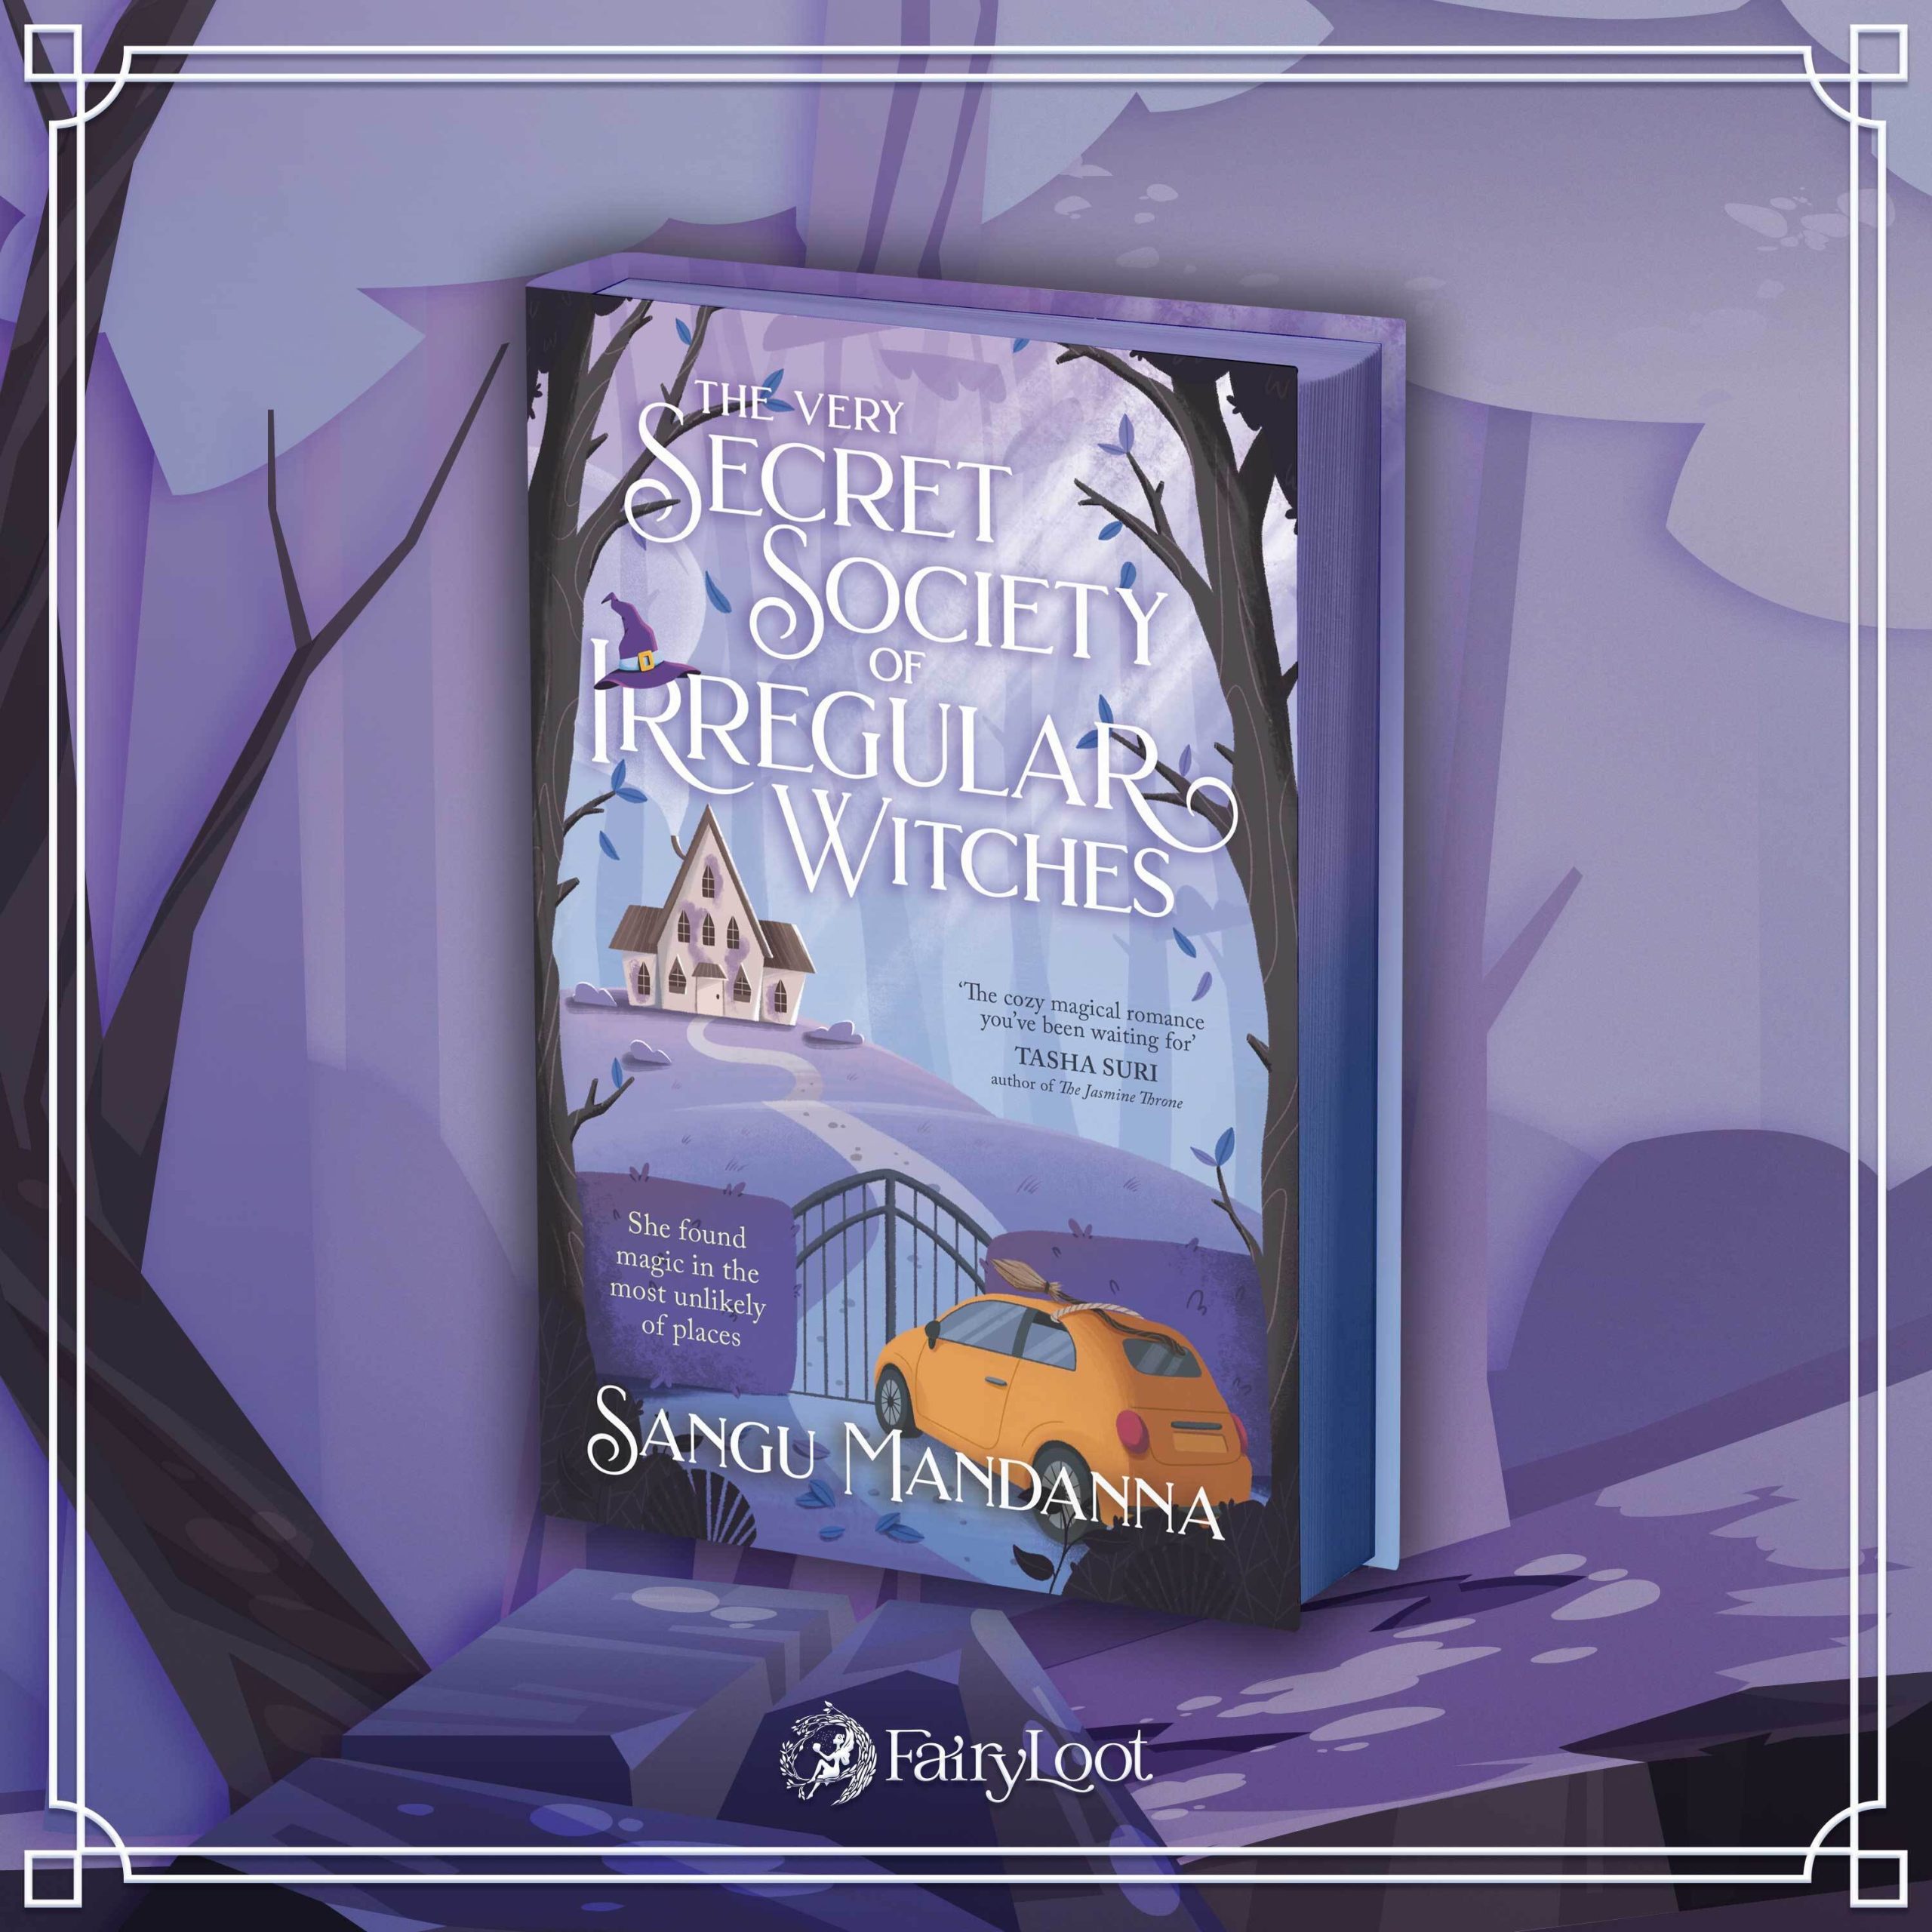 The Very Secret Society of Irregular Witches by Sangu Mandanna